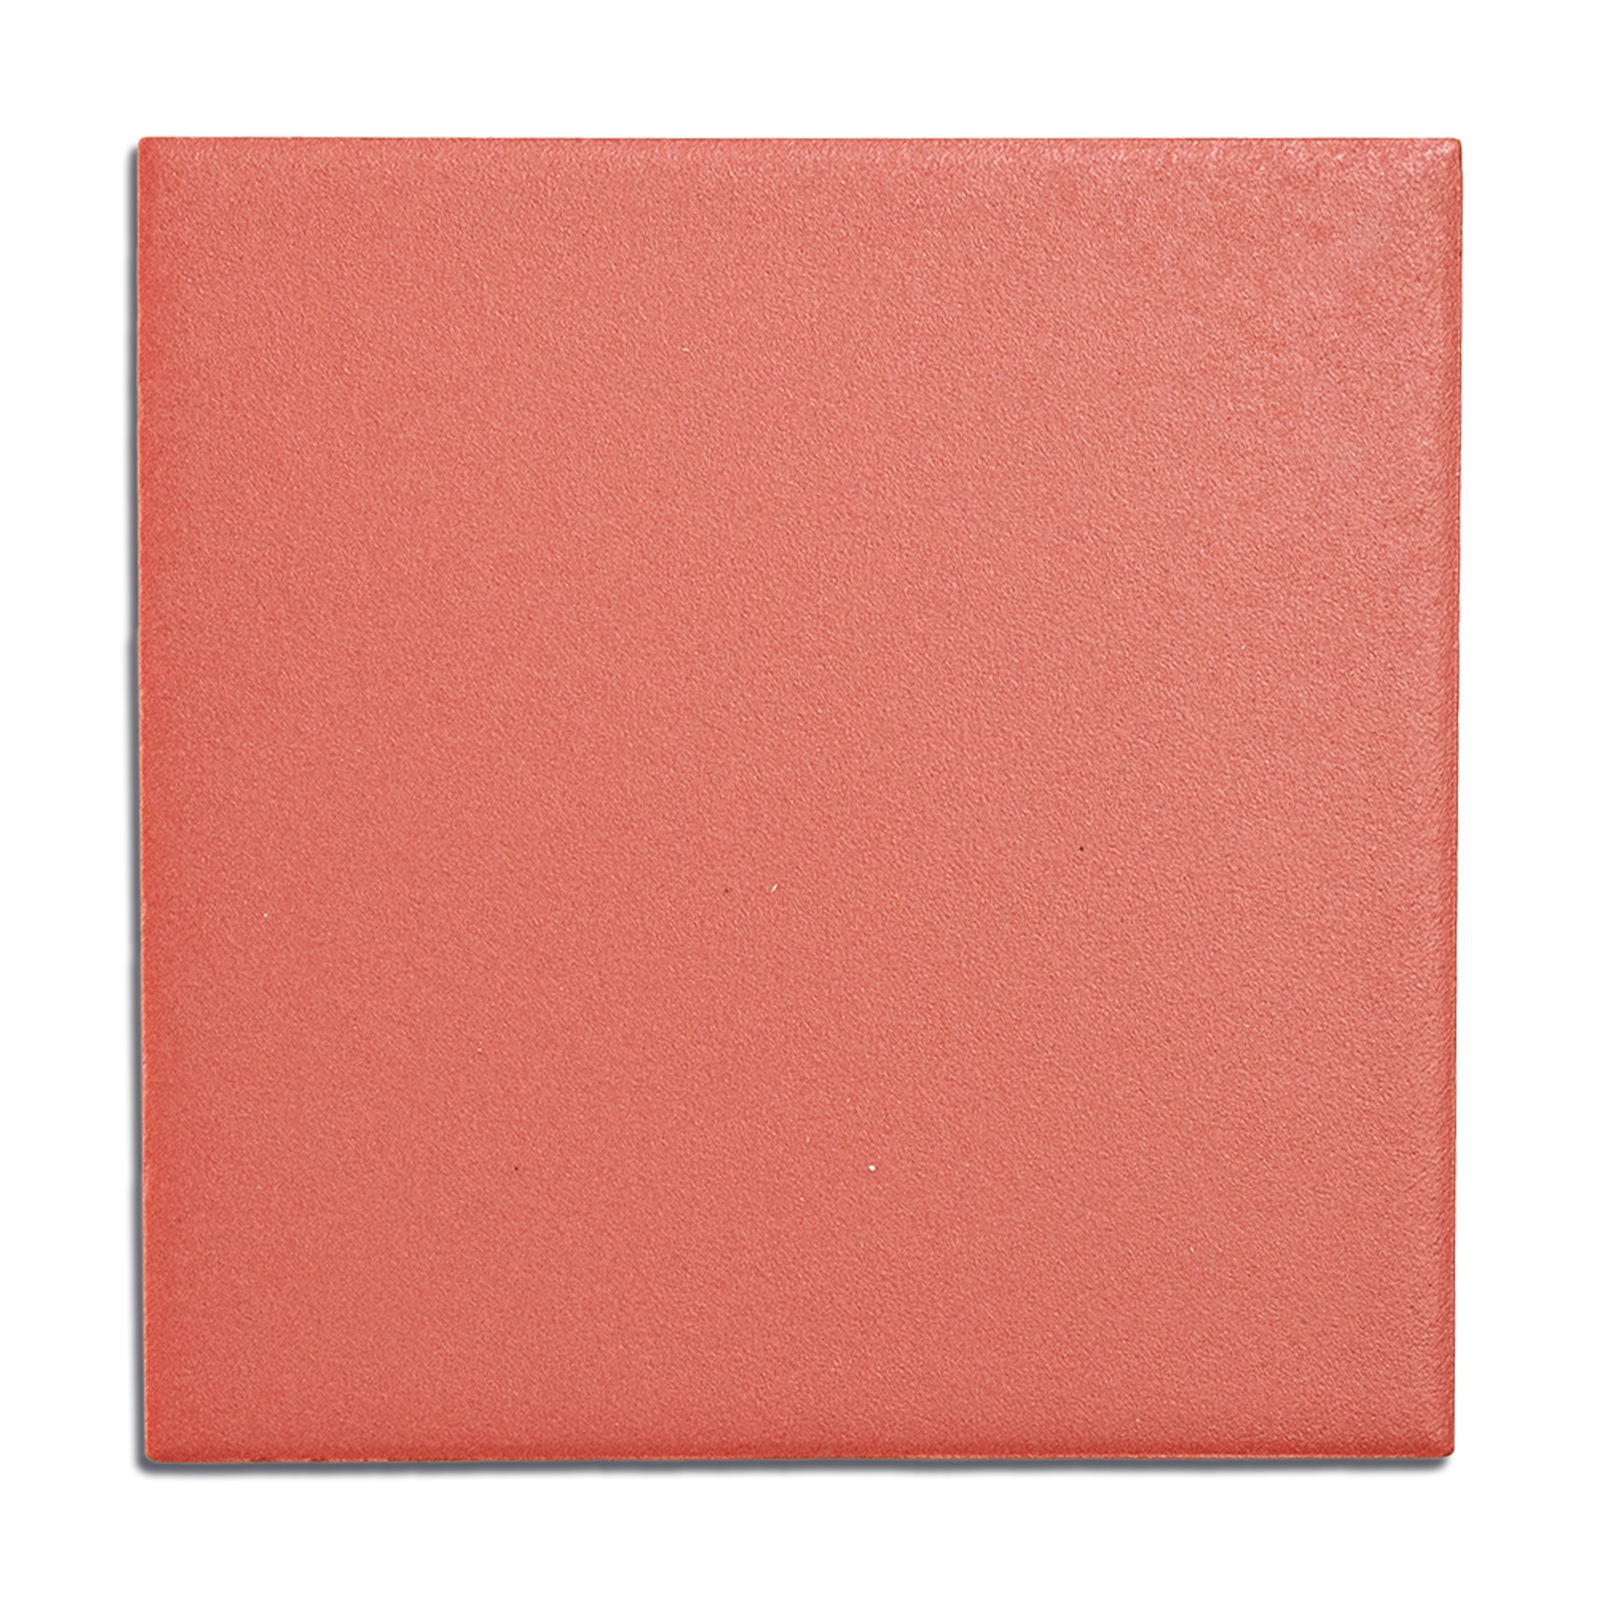 Trucco Square Valentine Red 5.5x5.5 Full Body Porcelain Tile